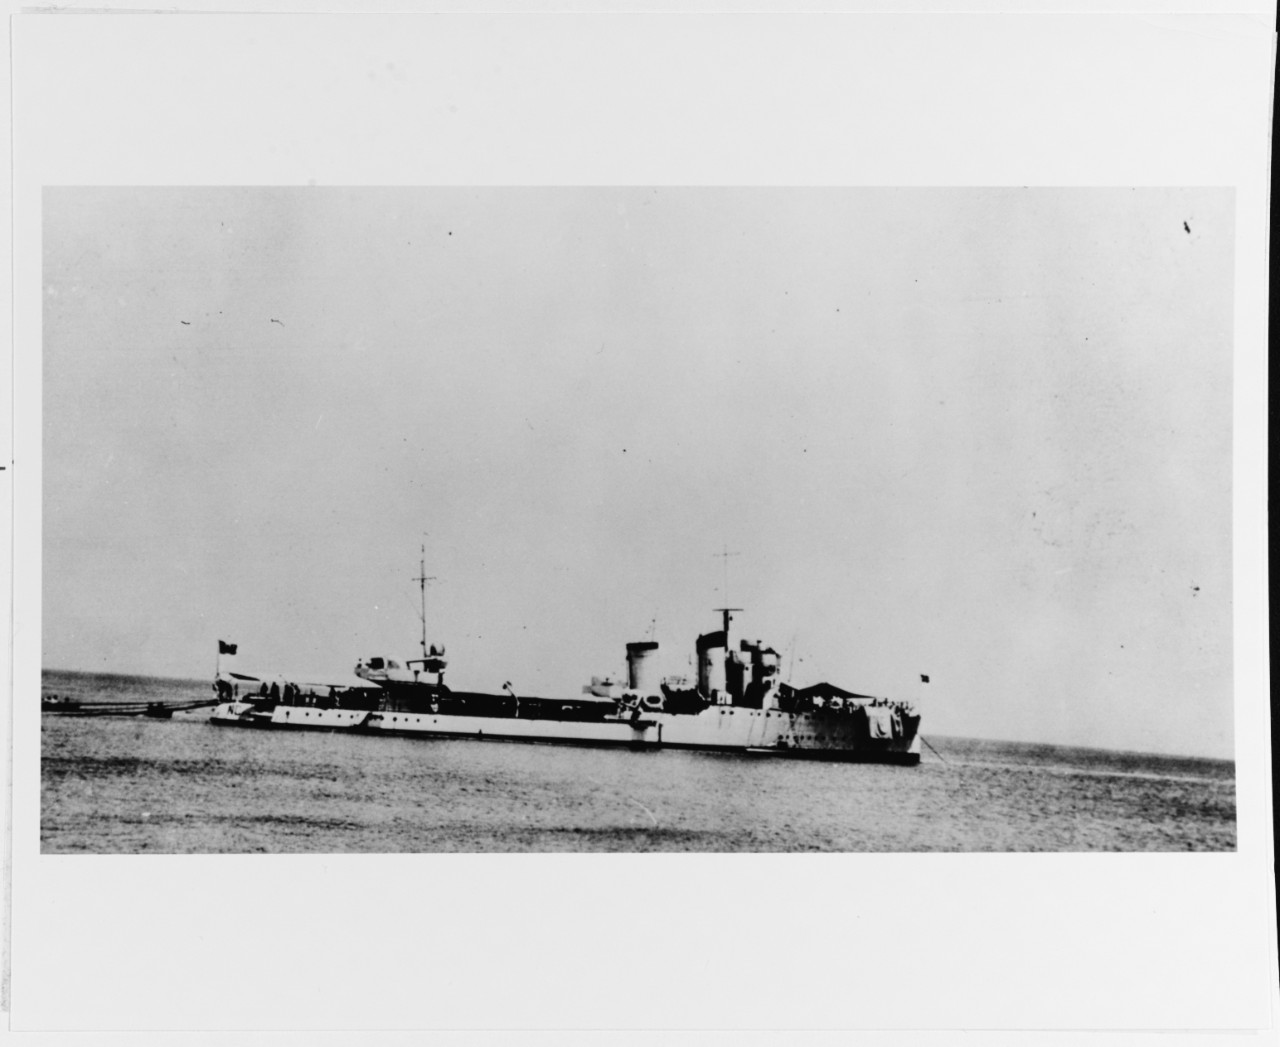 GIOVANNI NICOTERA (Italian destroyer, 1926)